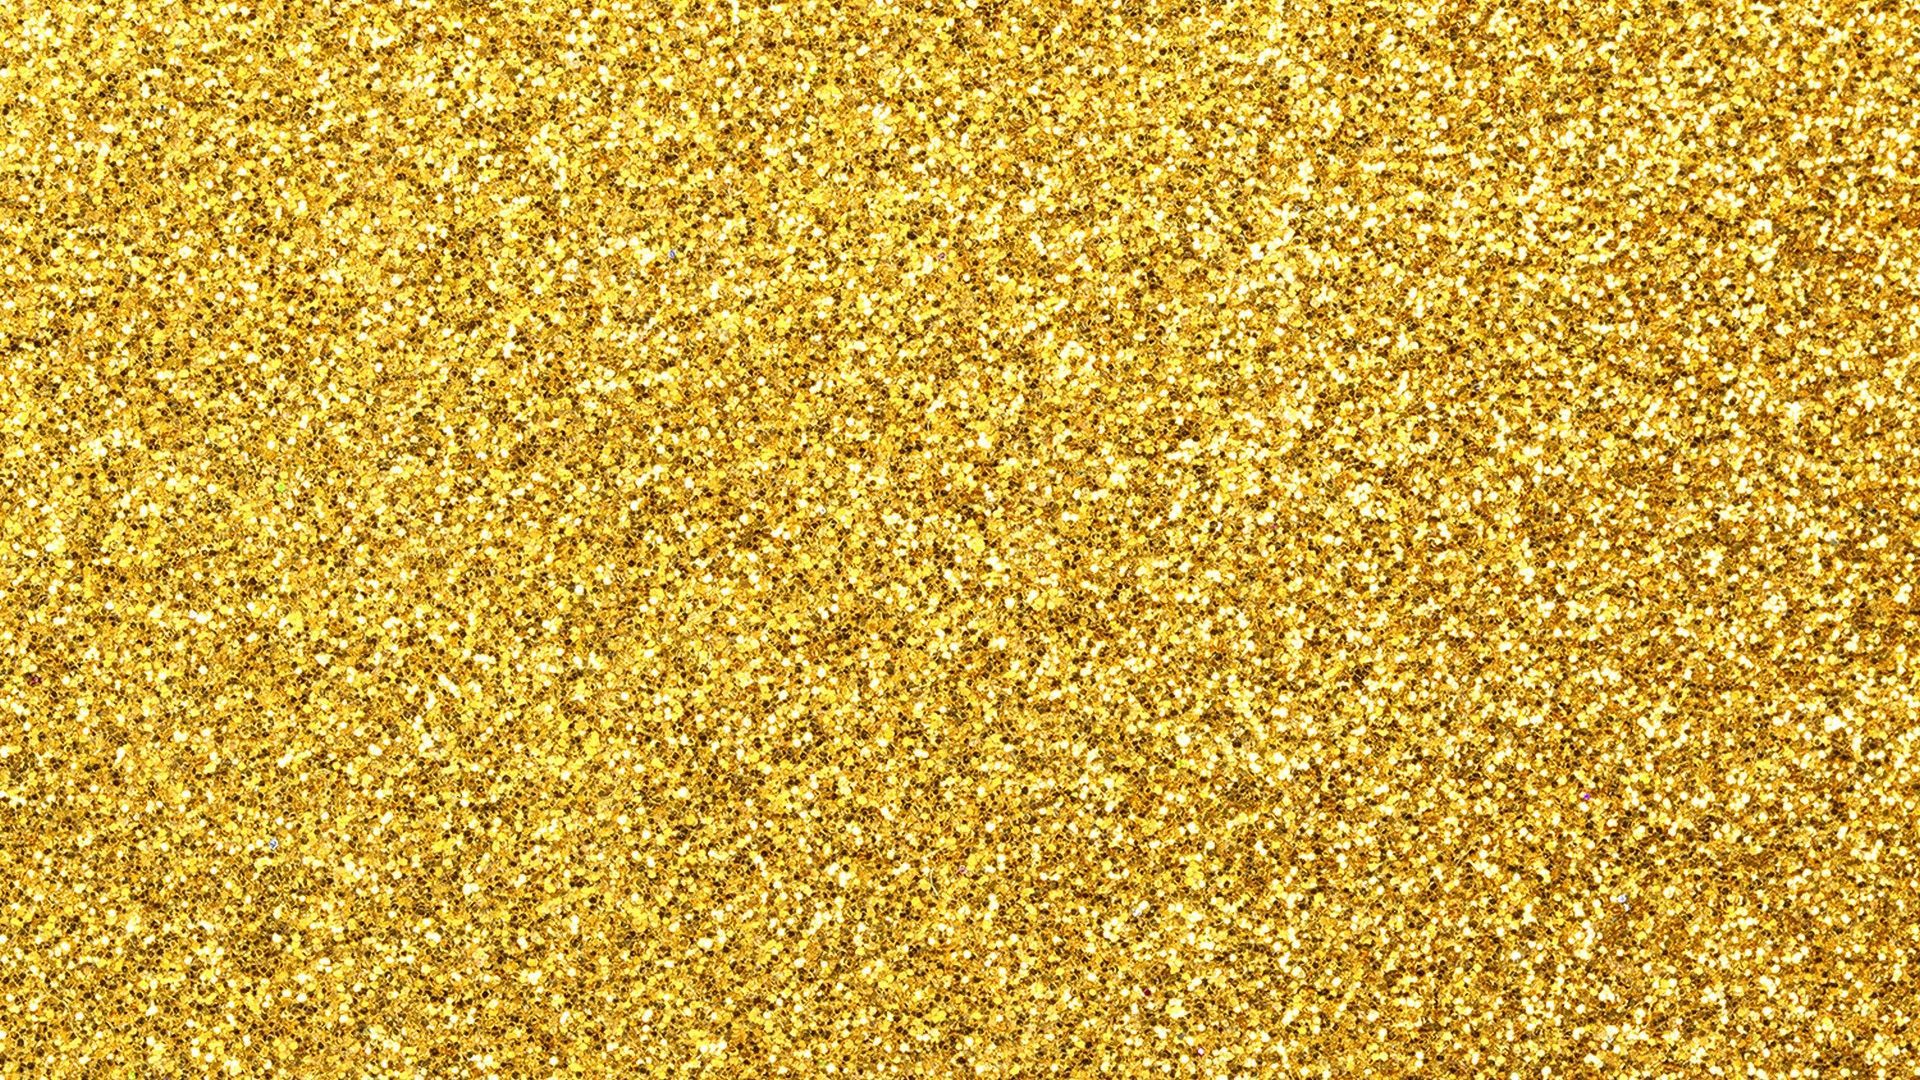 HD Wallpaper Gold Glitter Live Wallpaper HD. Gold glitter wallpaper iphone, iPhone wallpaper glitter, Gold wallpaper hd